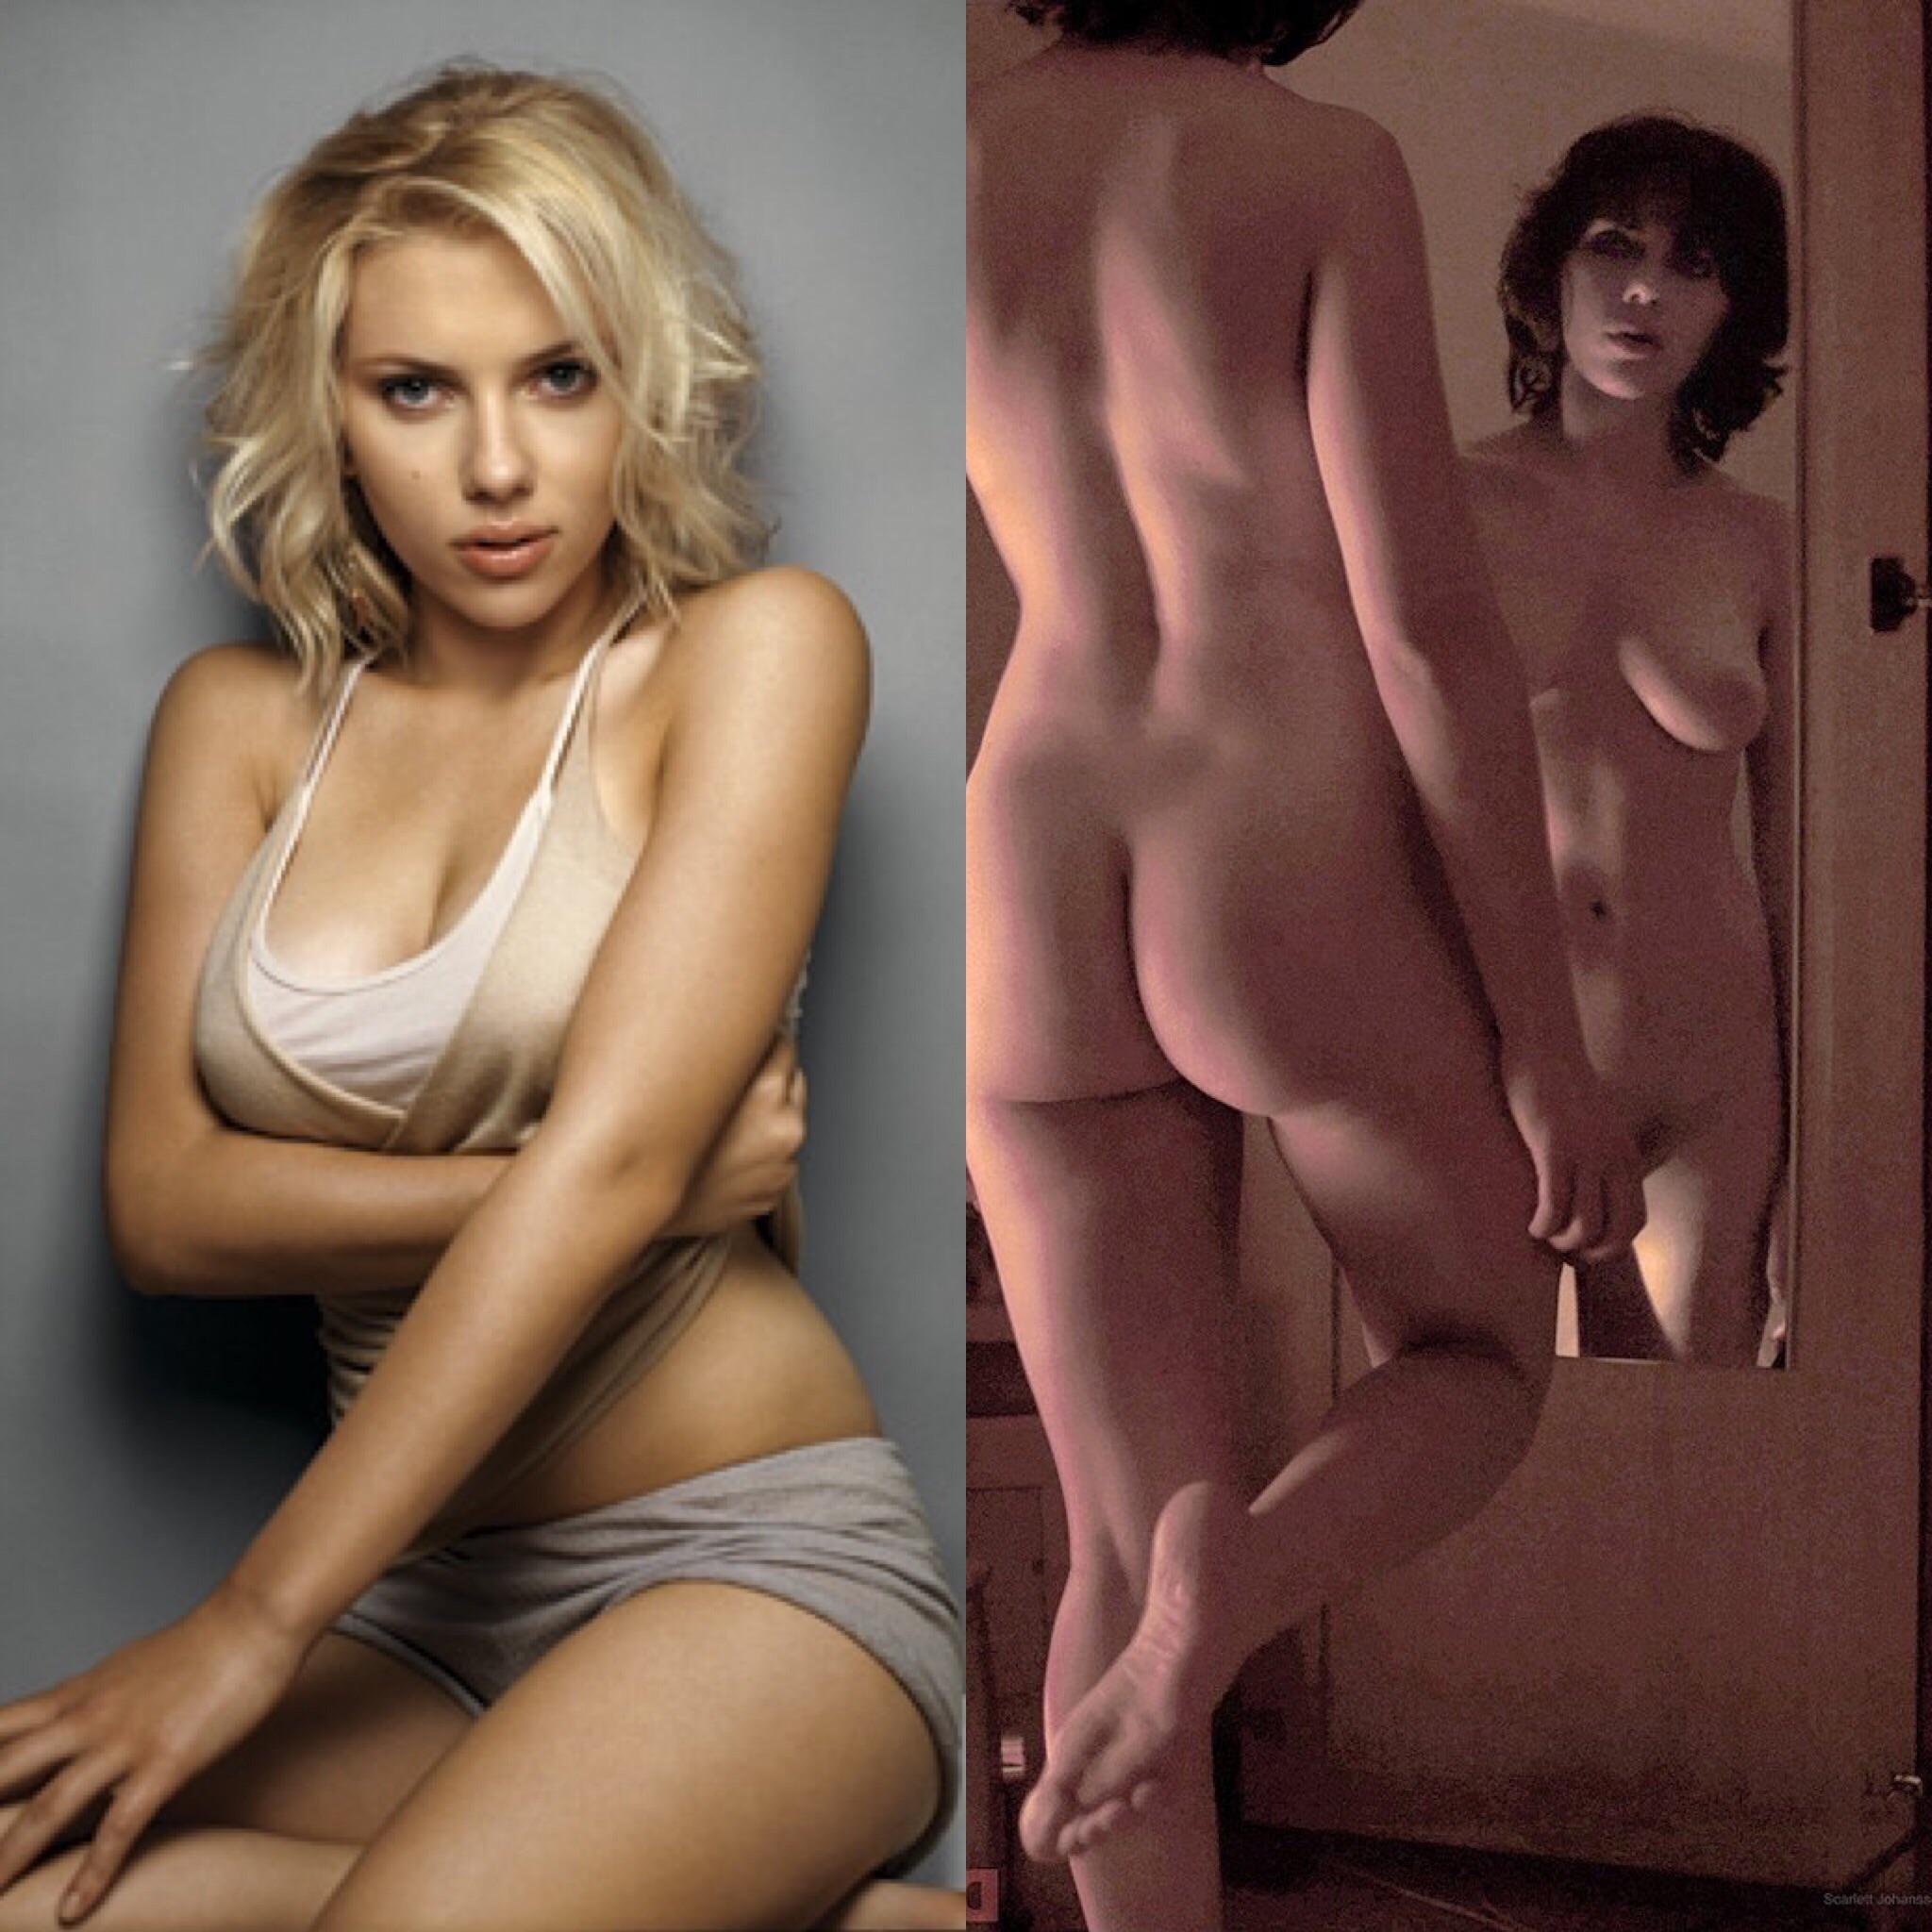 Scarlett johansson completely nude